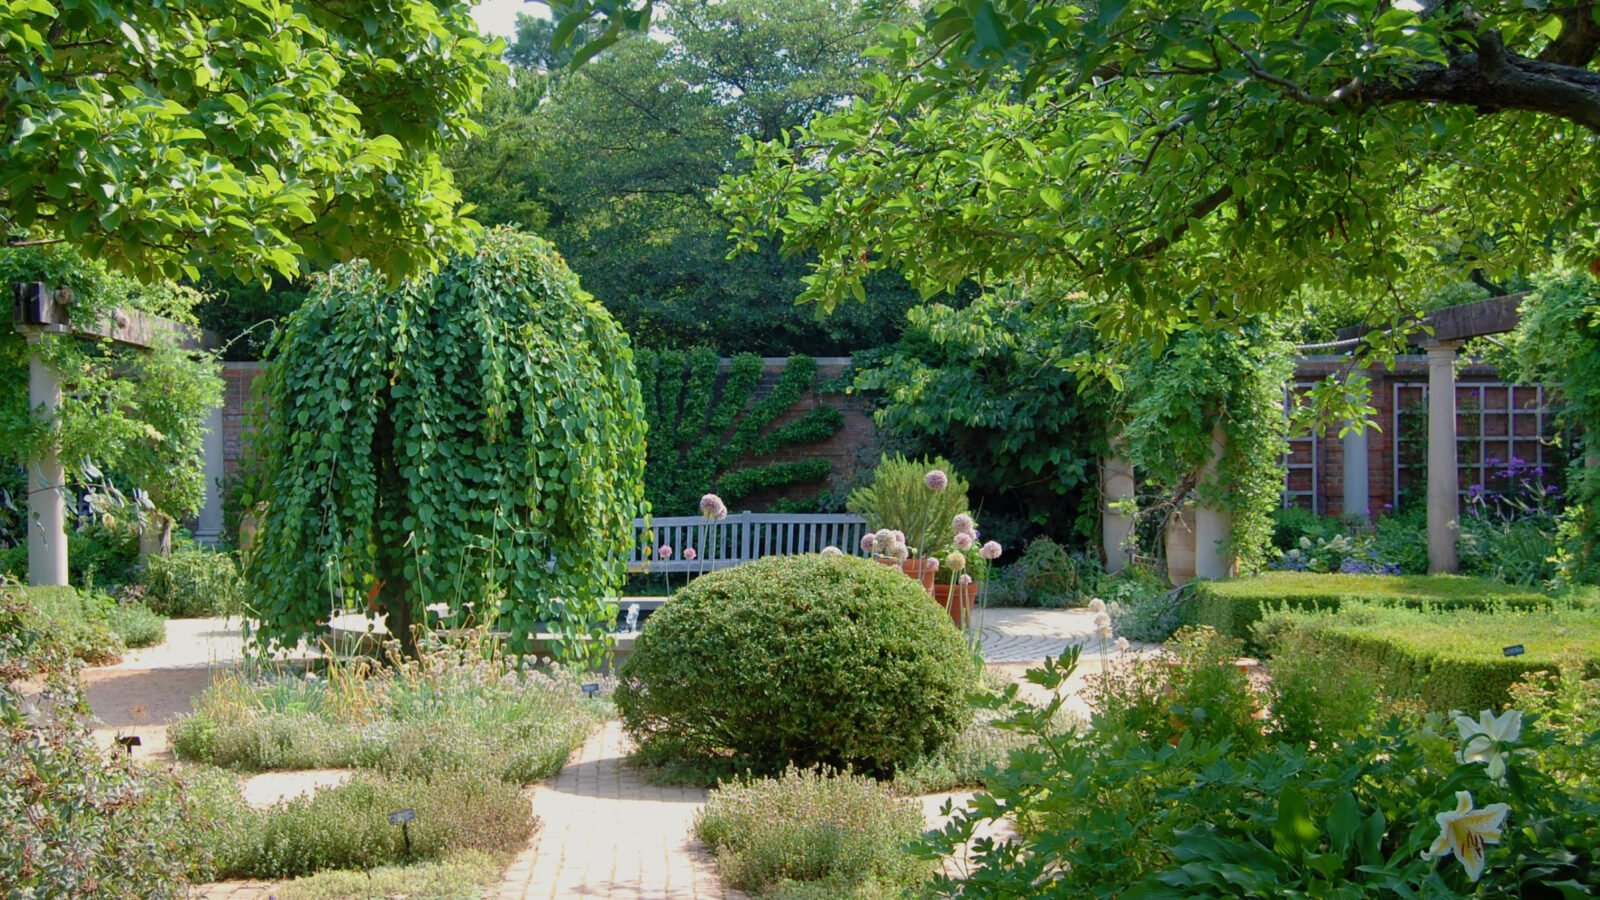 The idyllic English Walled Garden at the Chicago Botanic Garden (Photo: JR P)